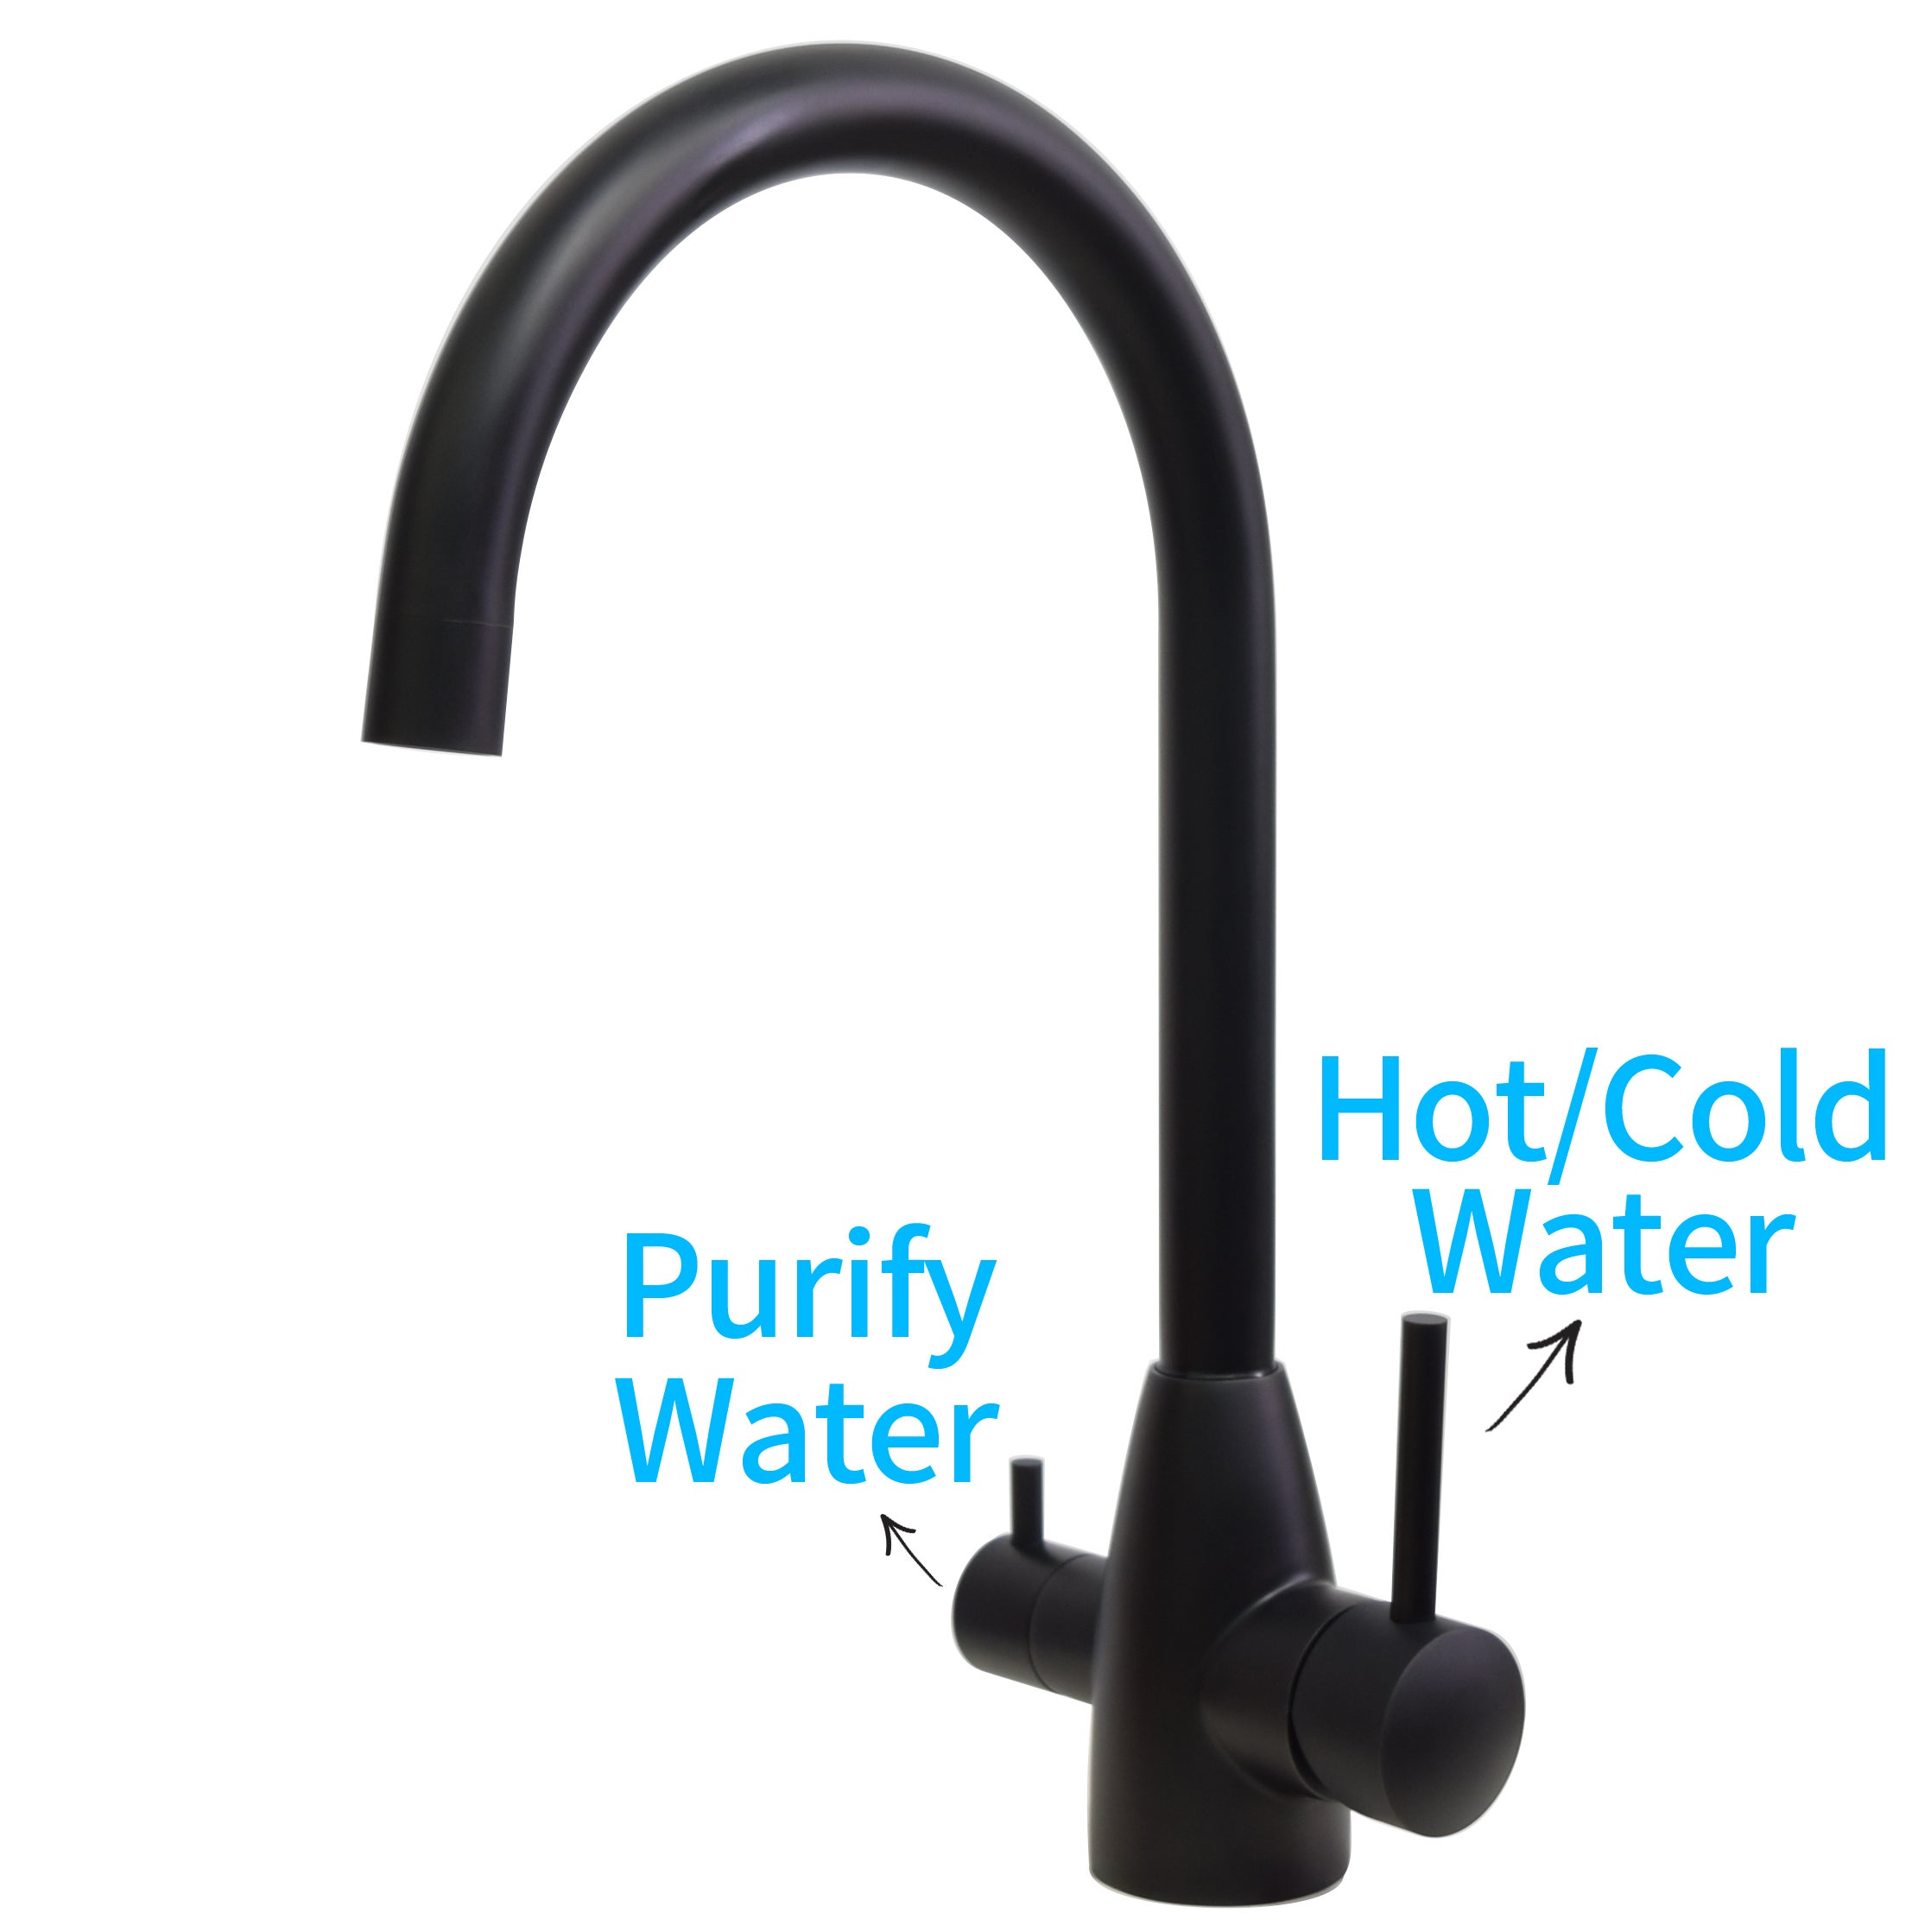 ACA Round Black 3 Ways Purified Water Kitchen Sink Mixer Filter Tap 360 Degree Swivel Stainless Steel